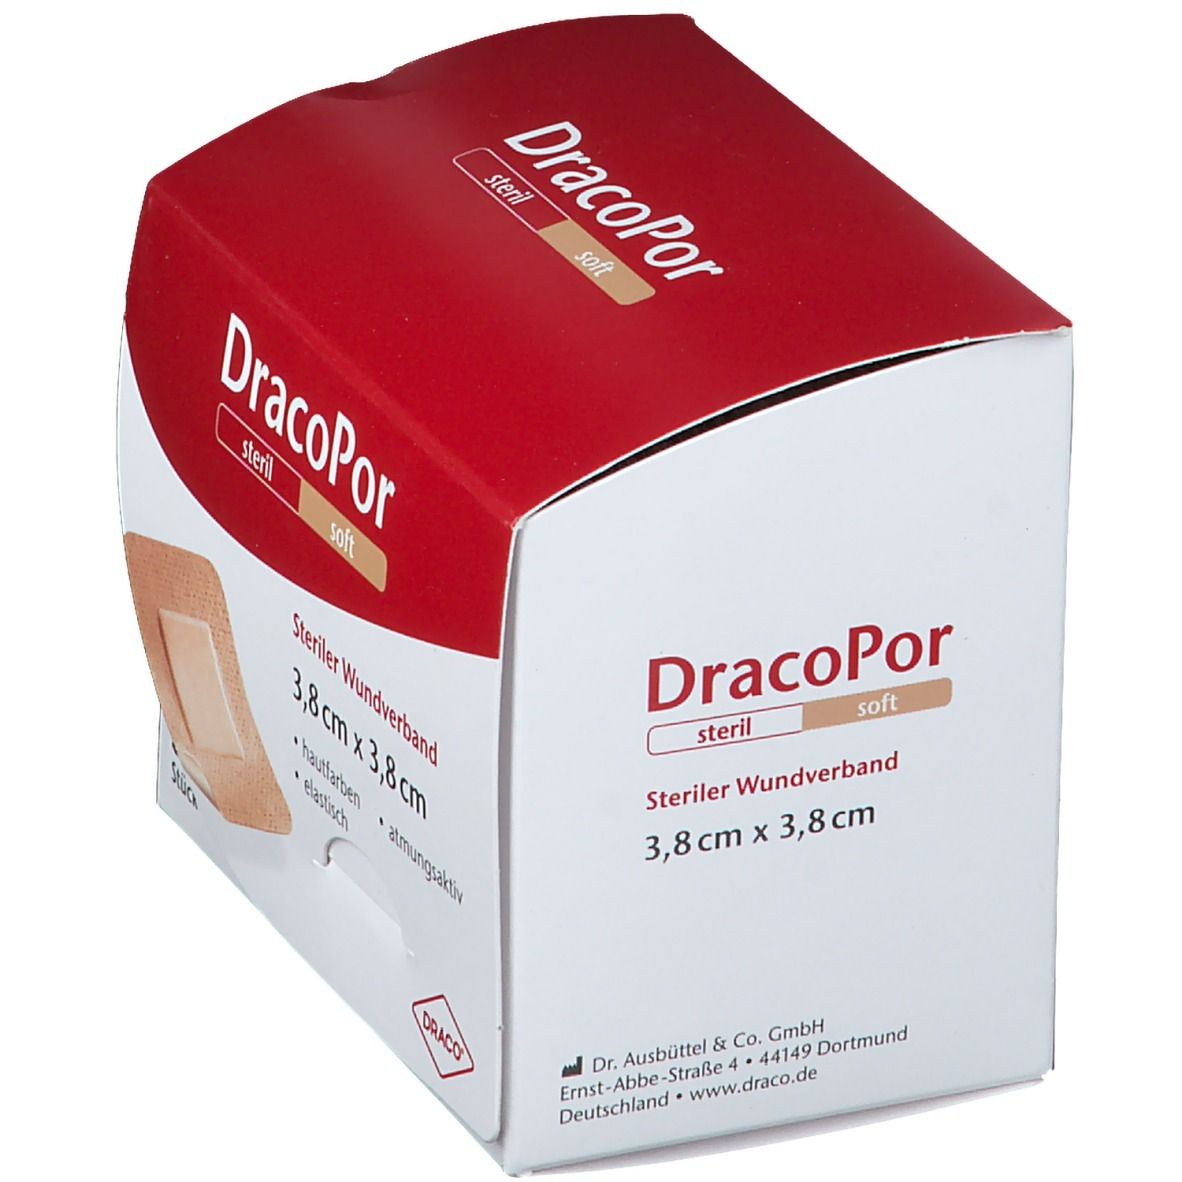 DracoPor Wundverband Soft hautfarben steril 3,8 x 3,8cm